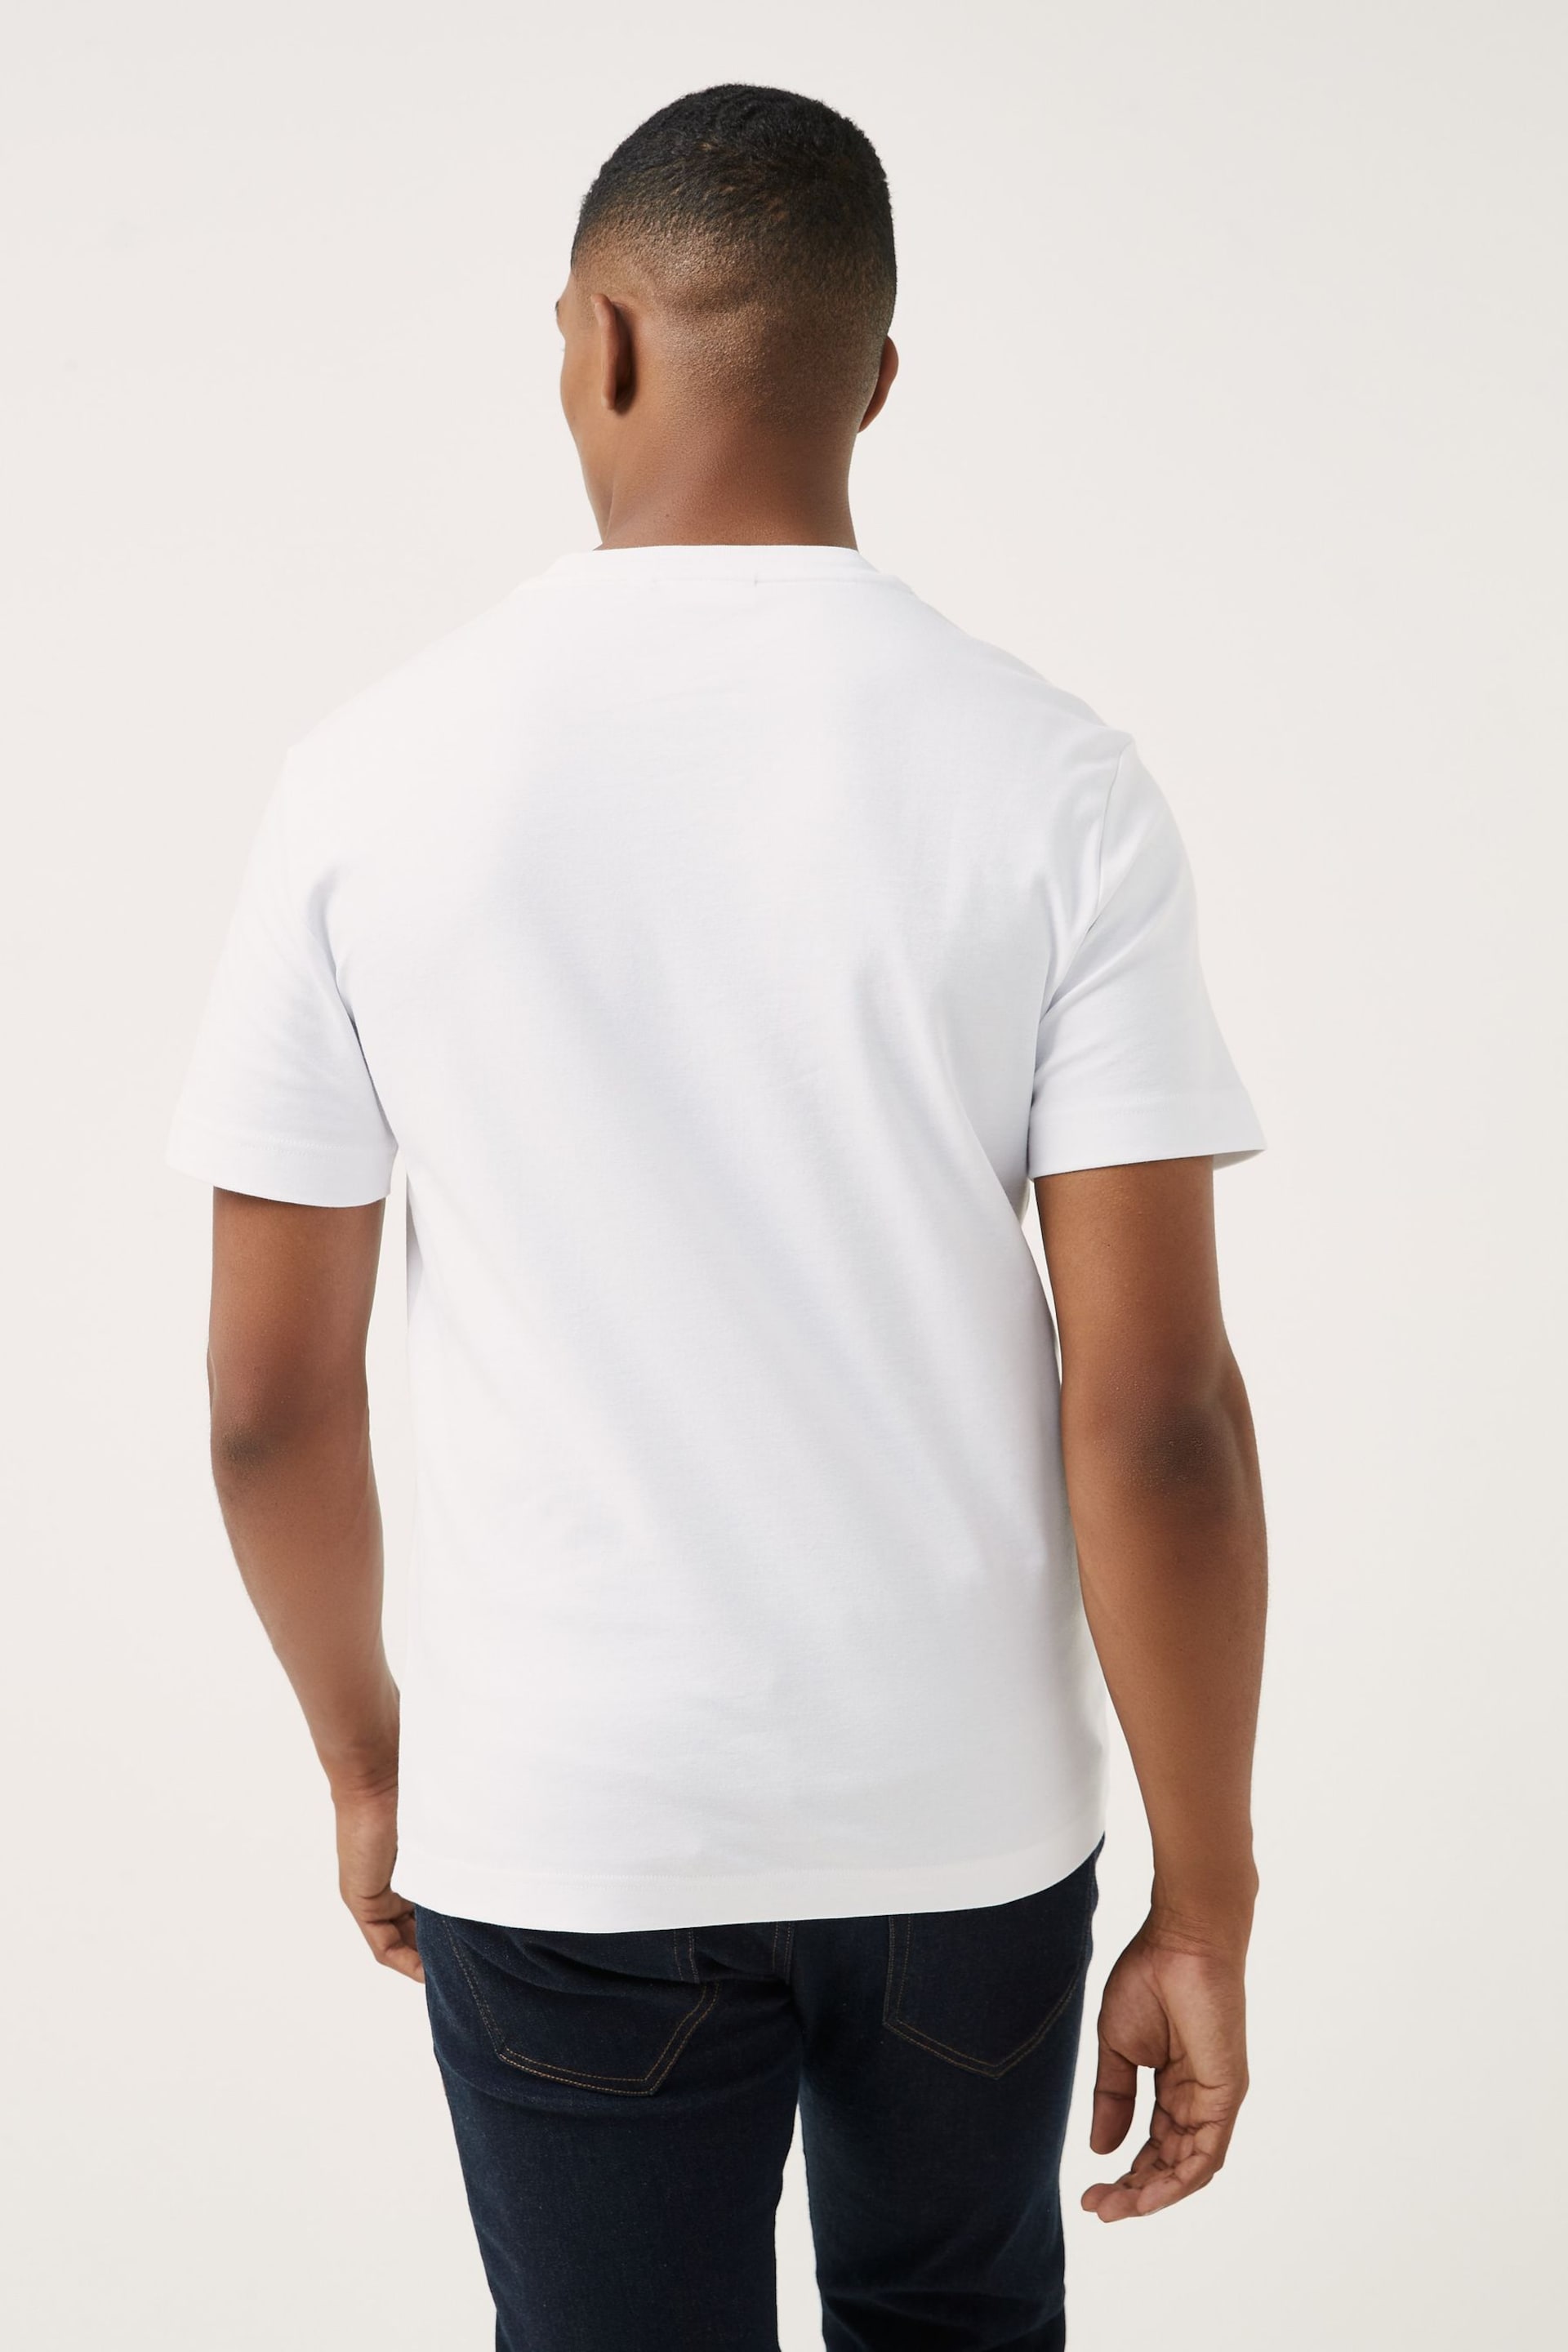 Calvin Klein White Interlock Logo T-Shirt - Image 2 of 5